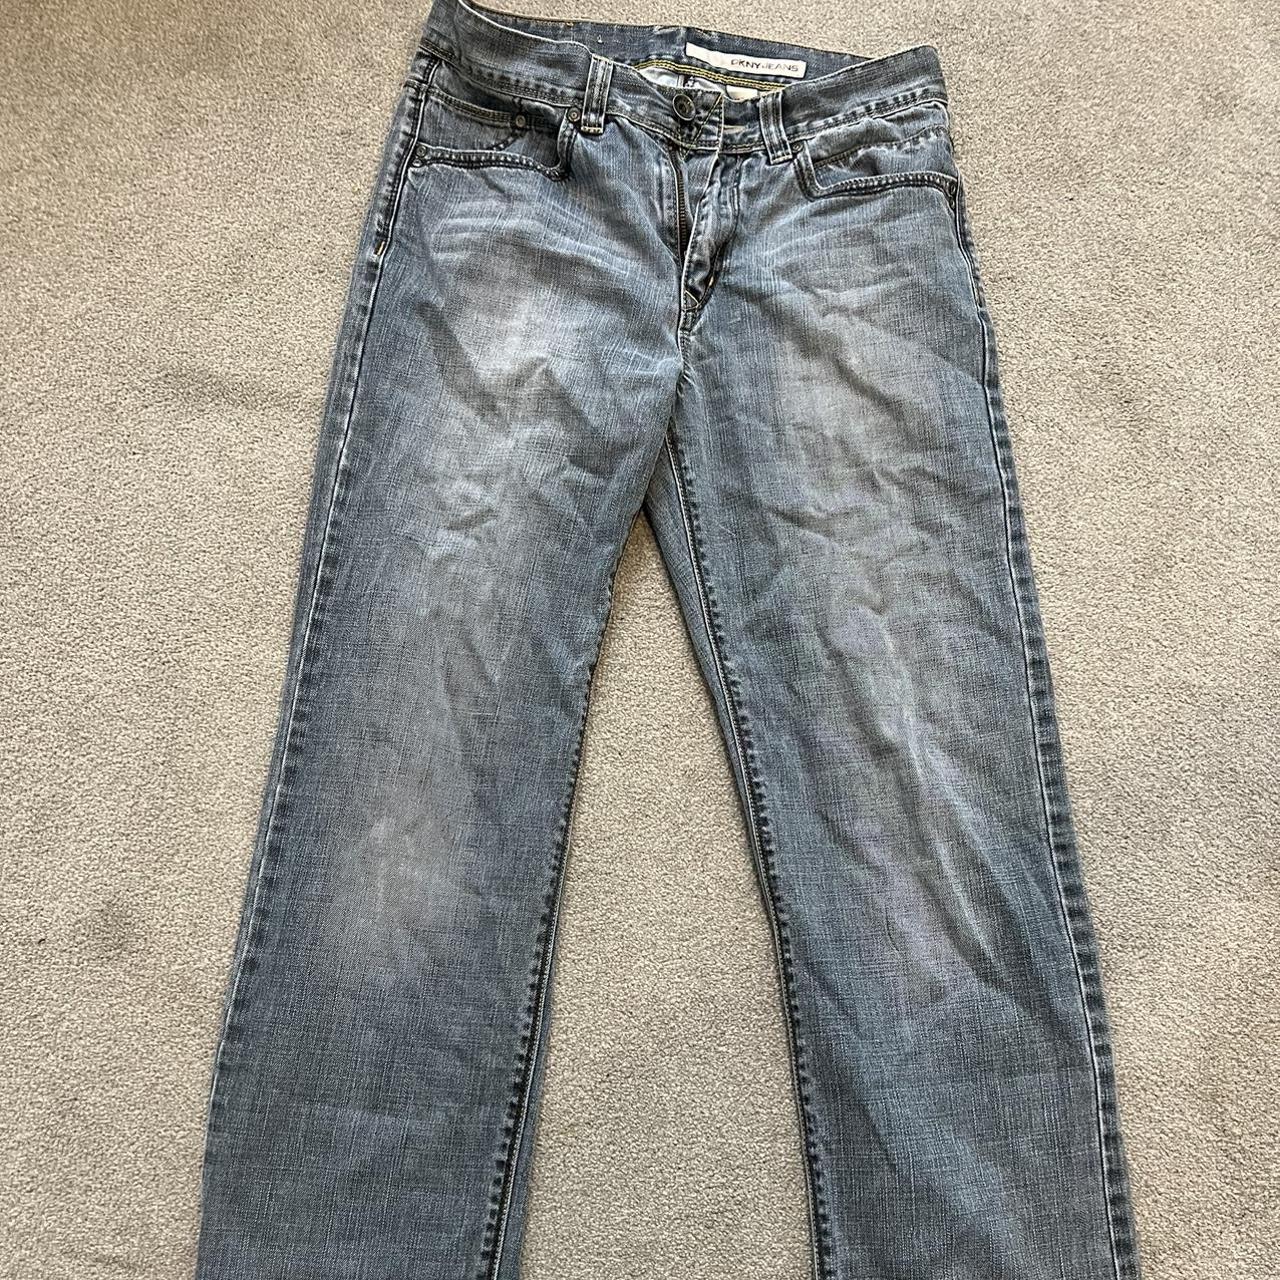 DKNY jeans Worn couple times - Depop